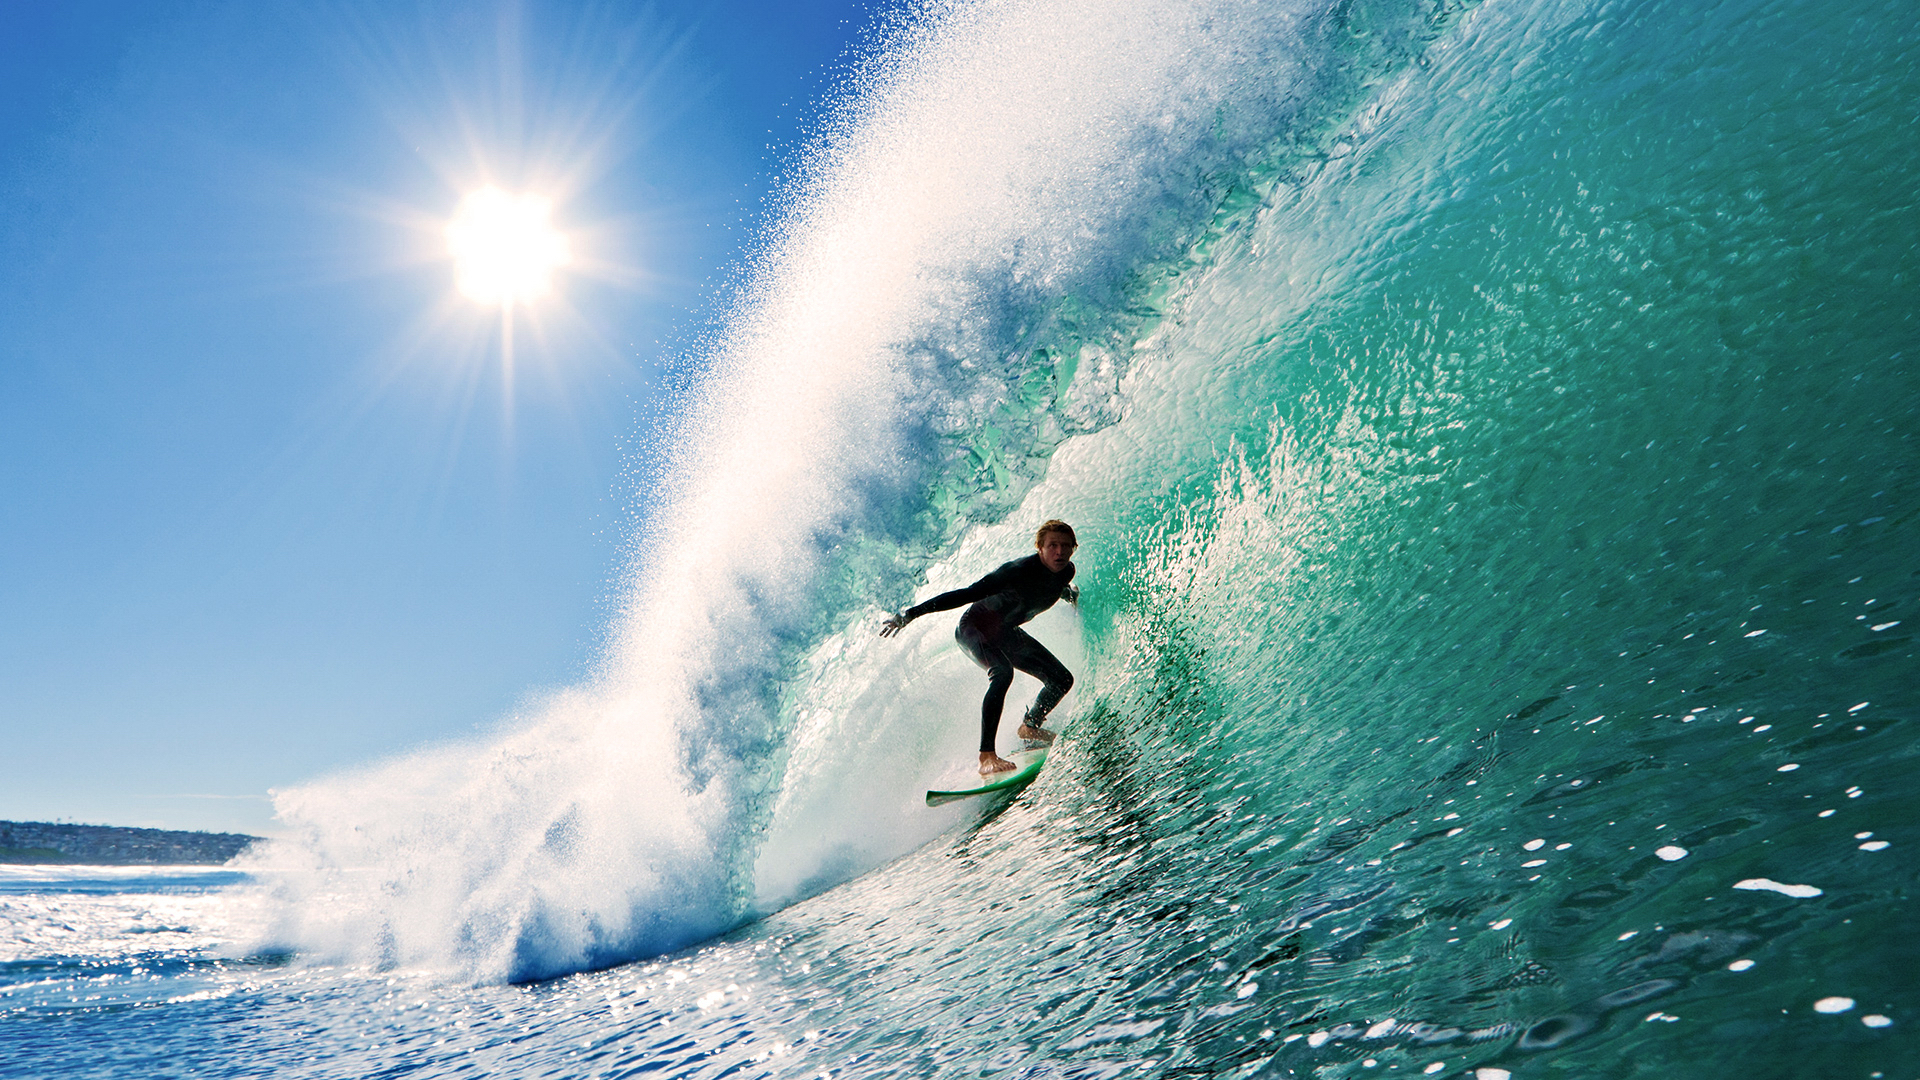 Surfing HD Wallpaper Desktop Image Cool